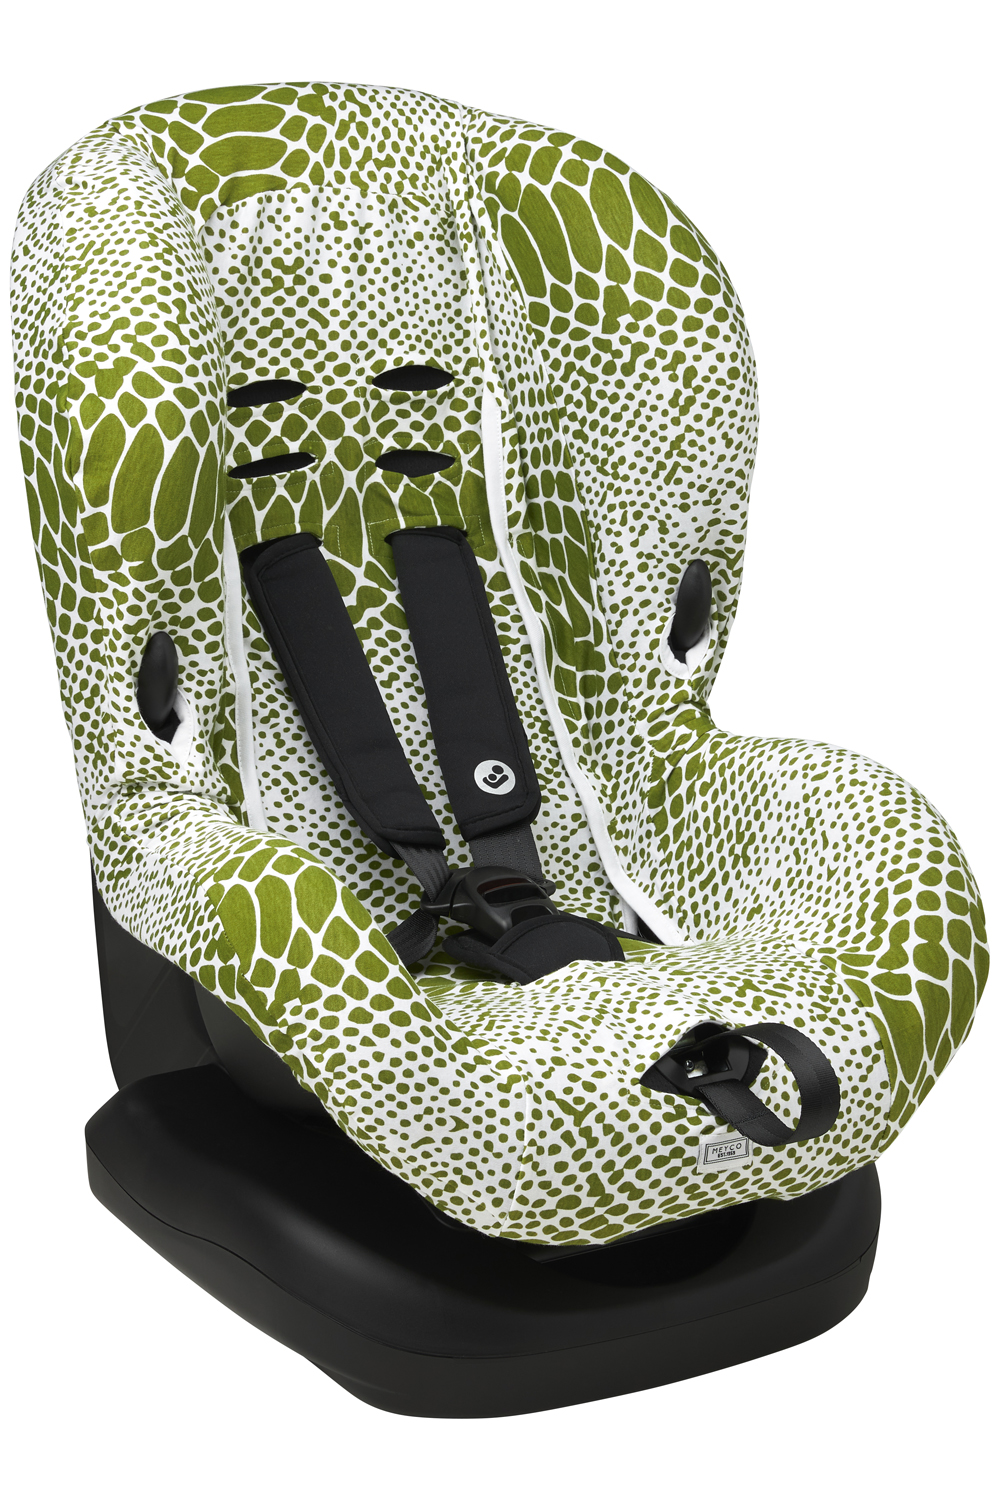 Car seat cover Snake - avocado - Group 1+